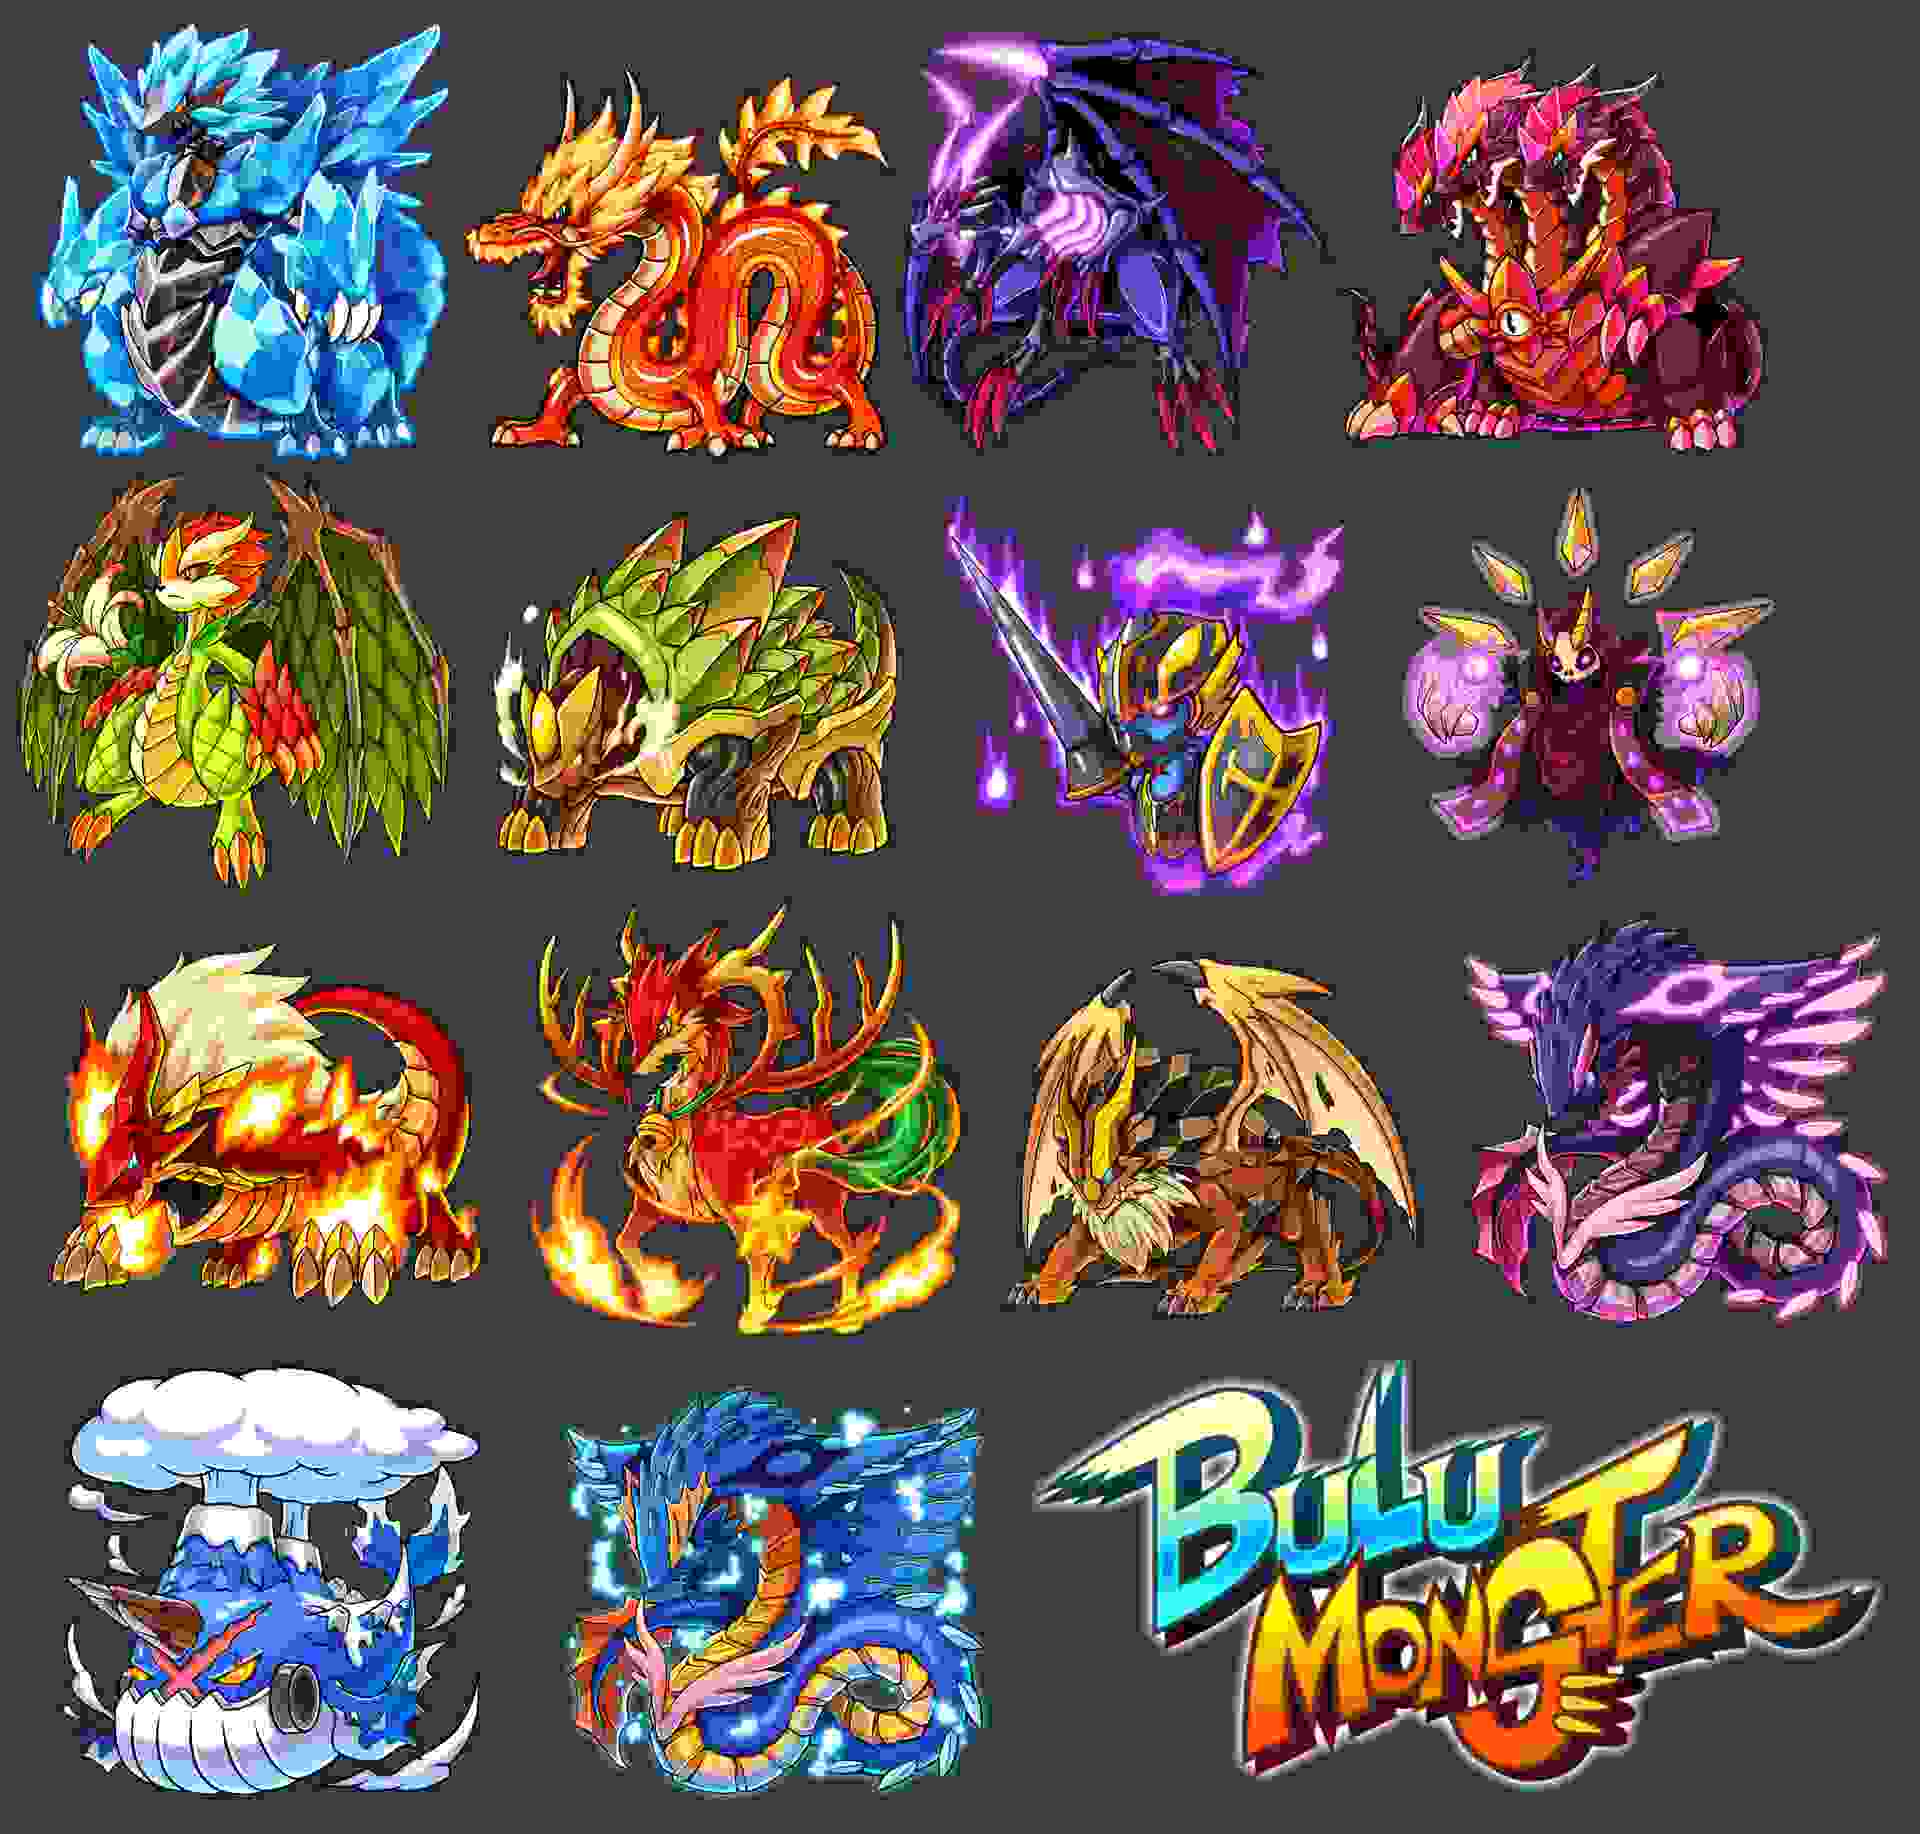 Bulu Monster Mod